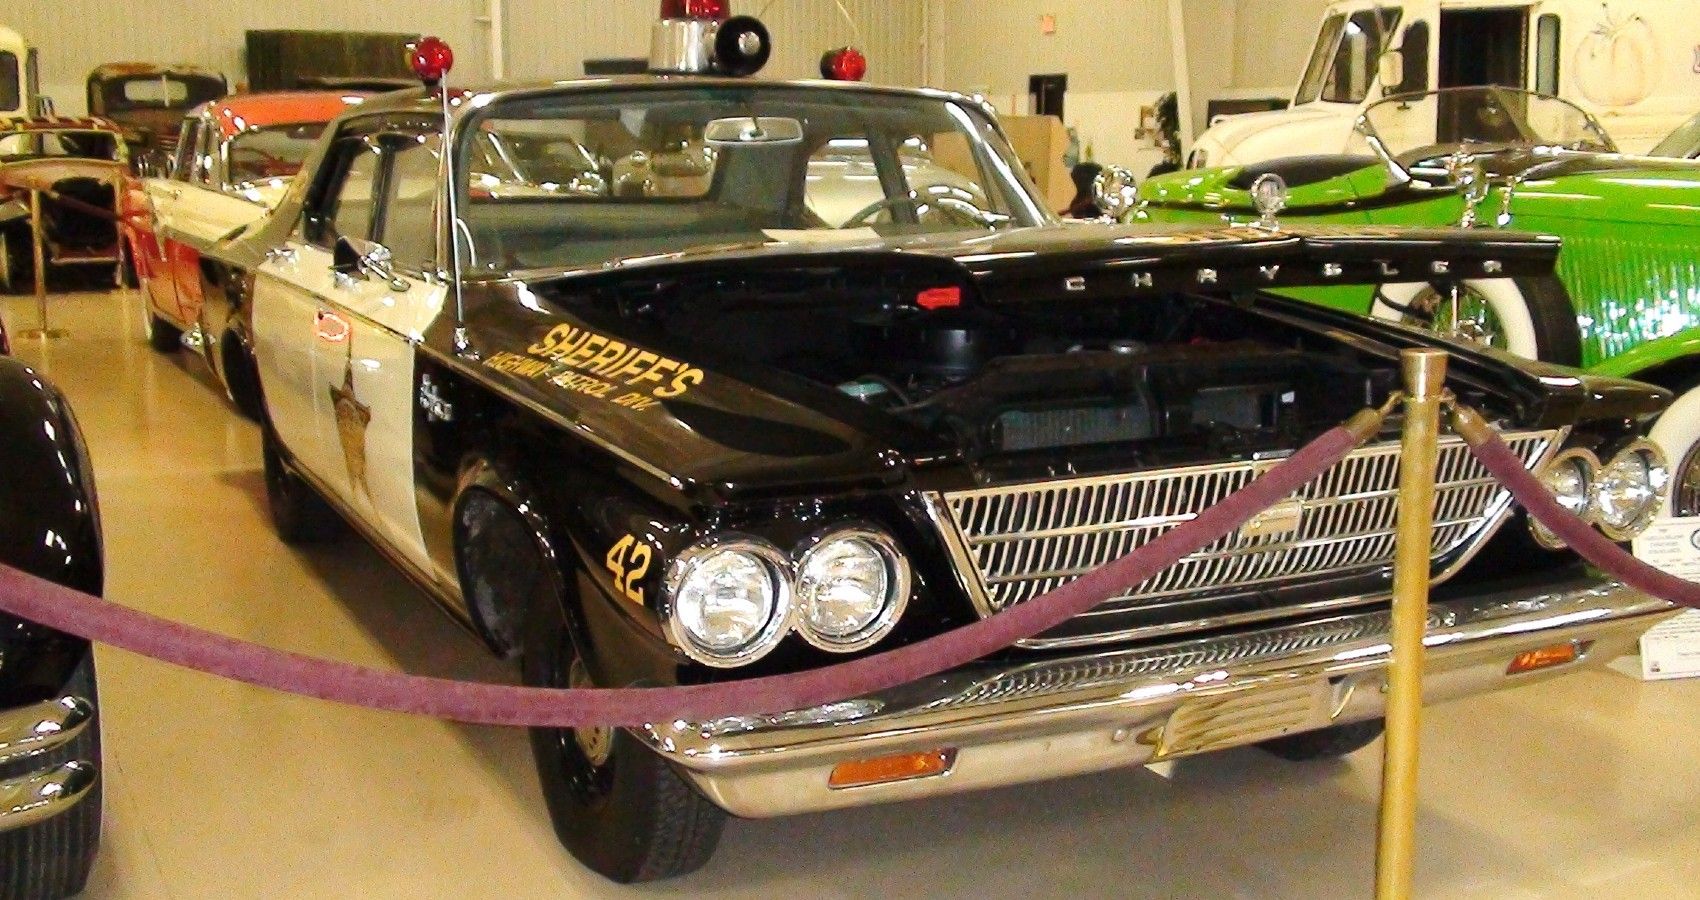 Chrysler Enforcer Police Car from around 1960